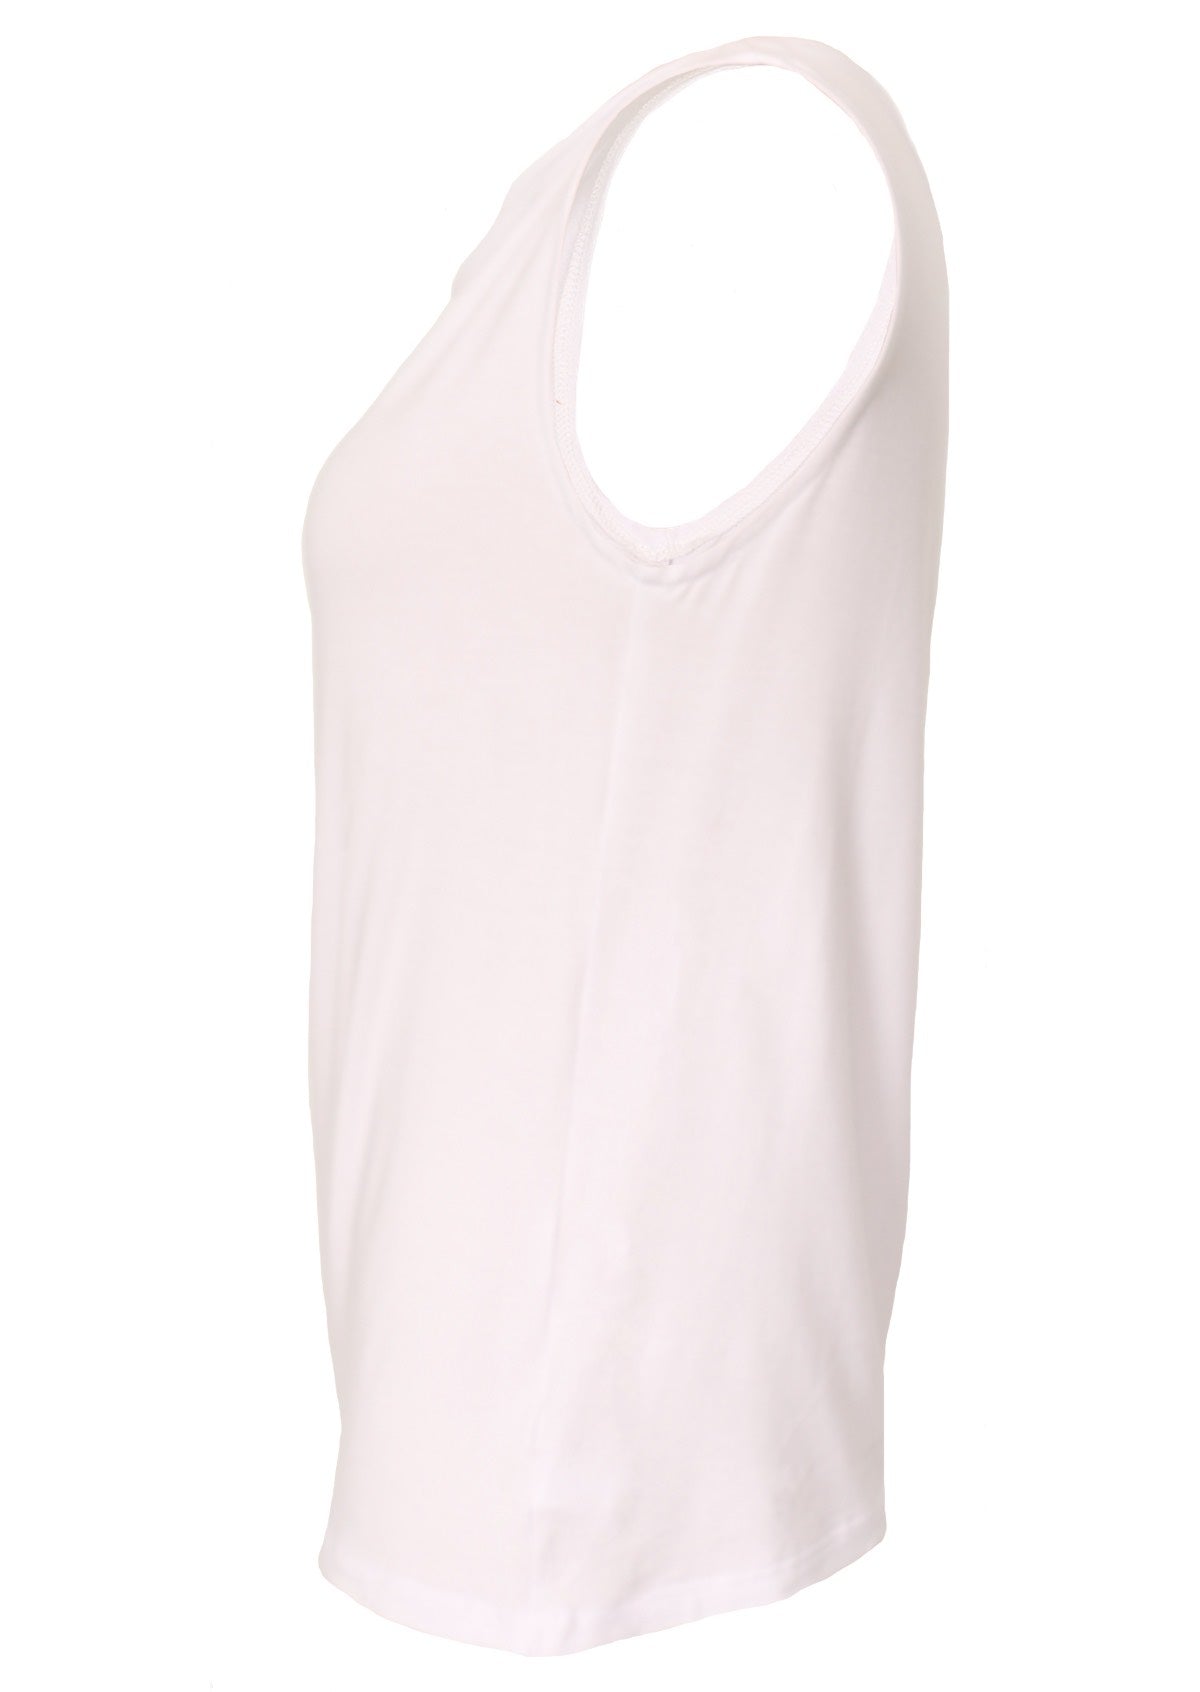 Side view sleeveless rayon white basic top